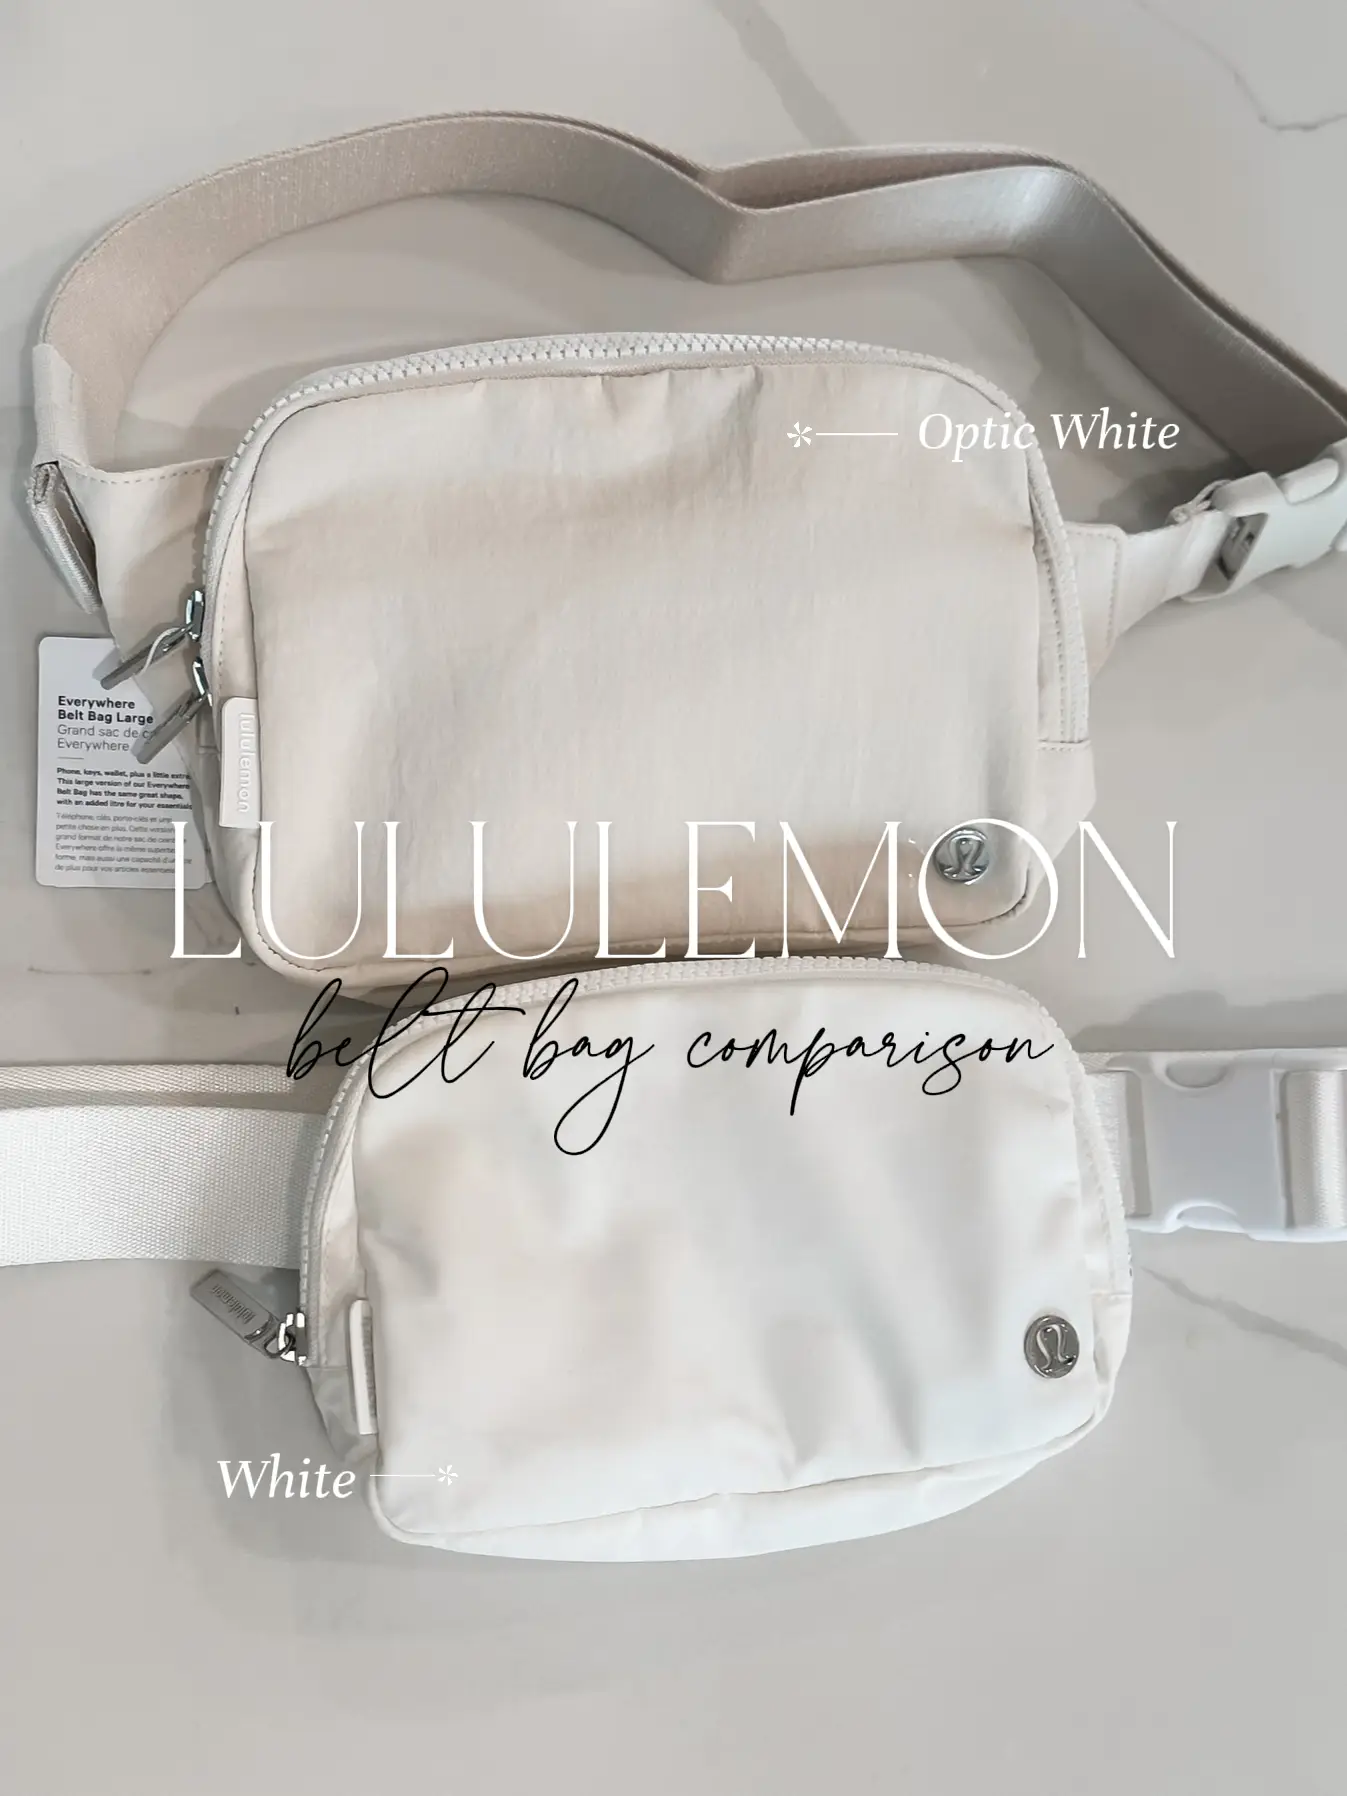 Lululemon Belt Bag Comparison  Gallery posted by Amanda Silber